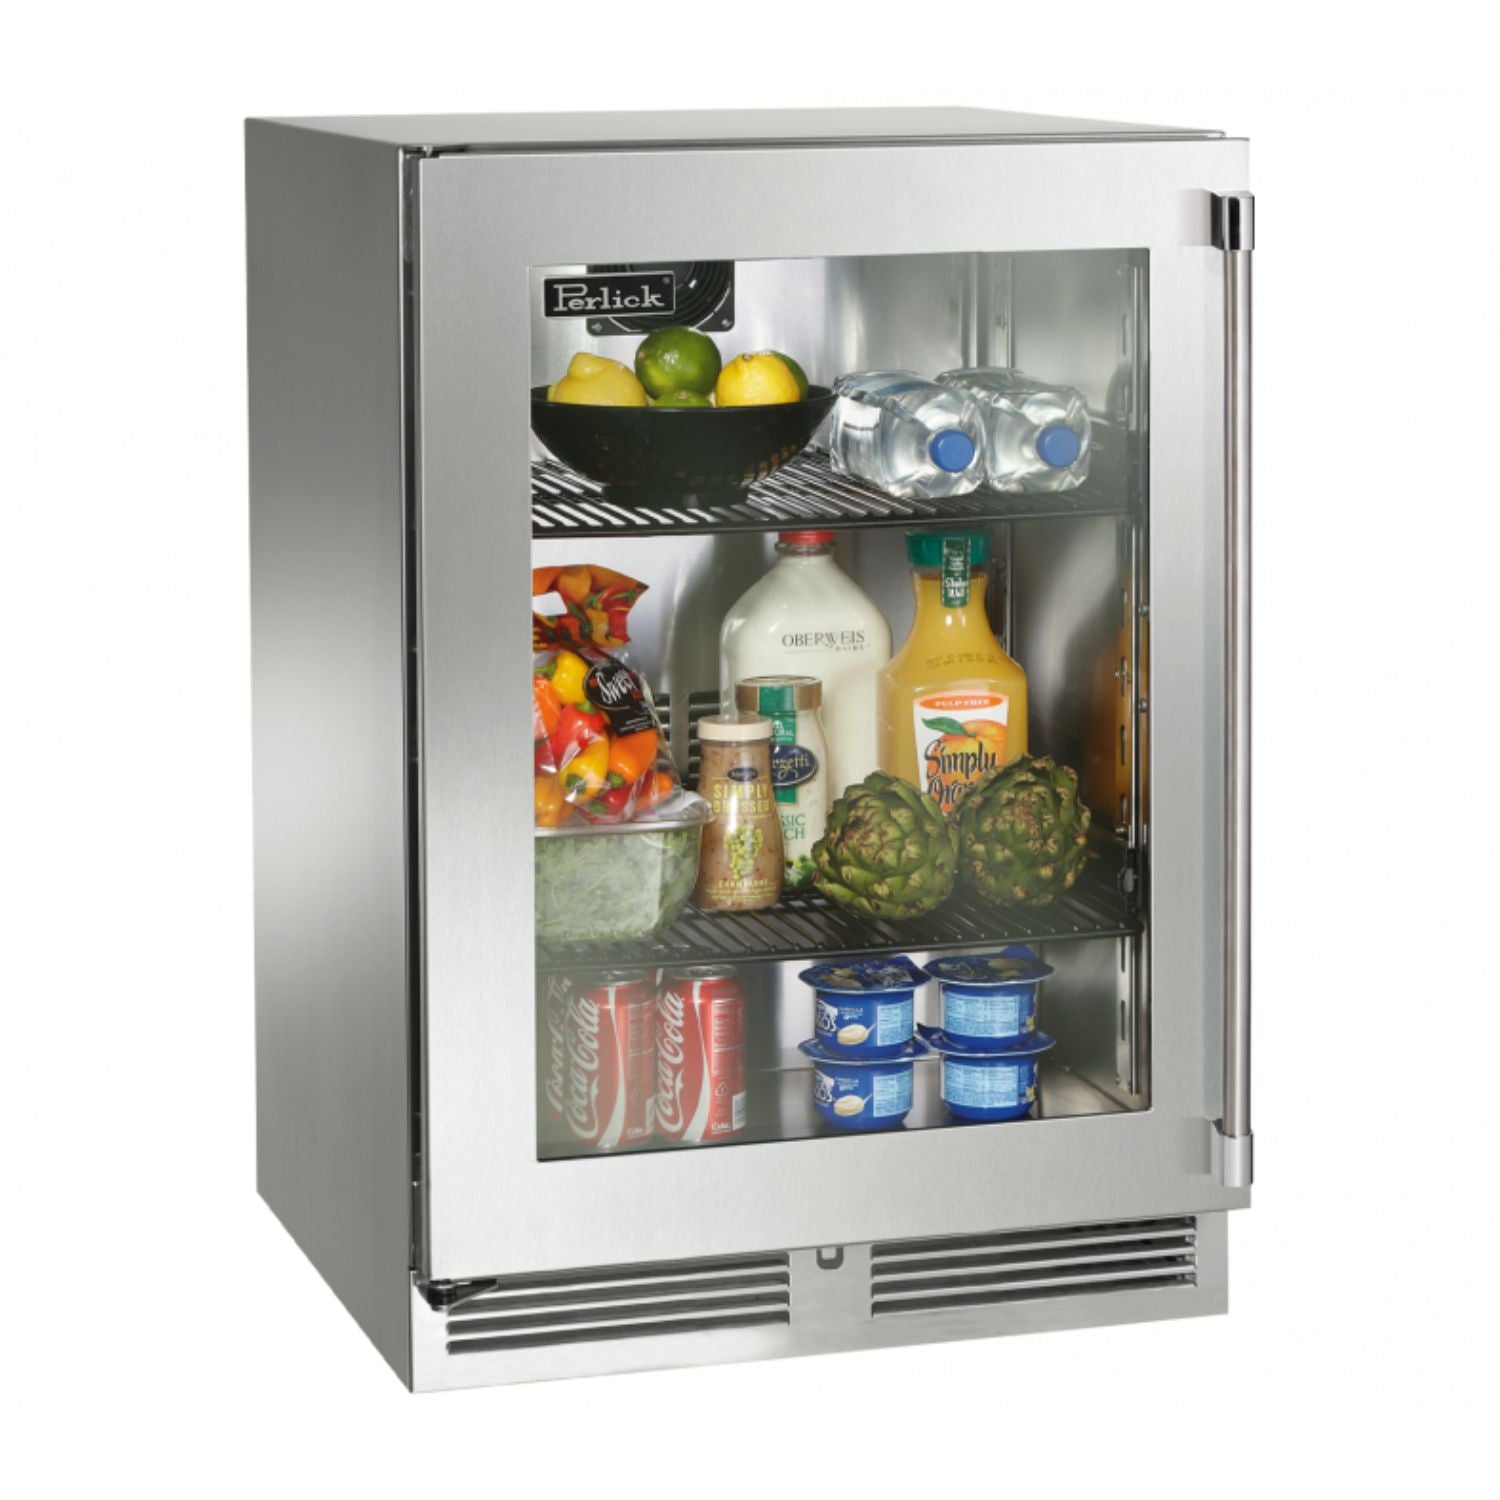 Perlick Signature HP24 24 inch Undercounter Outdoor Refrigerator with Stainless Steel Glass Door